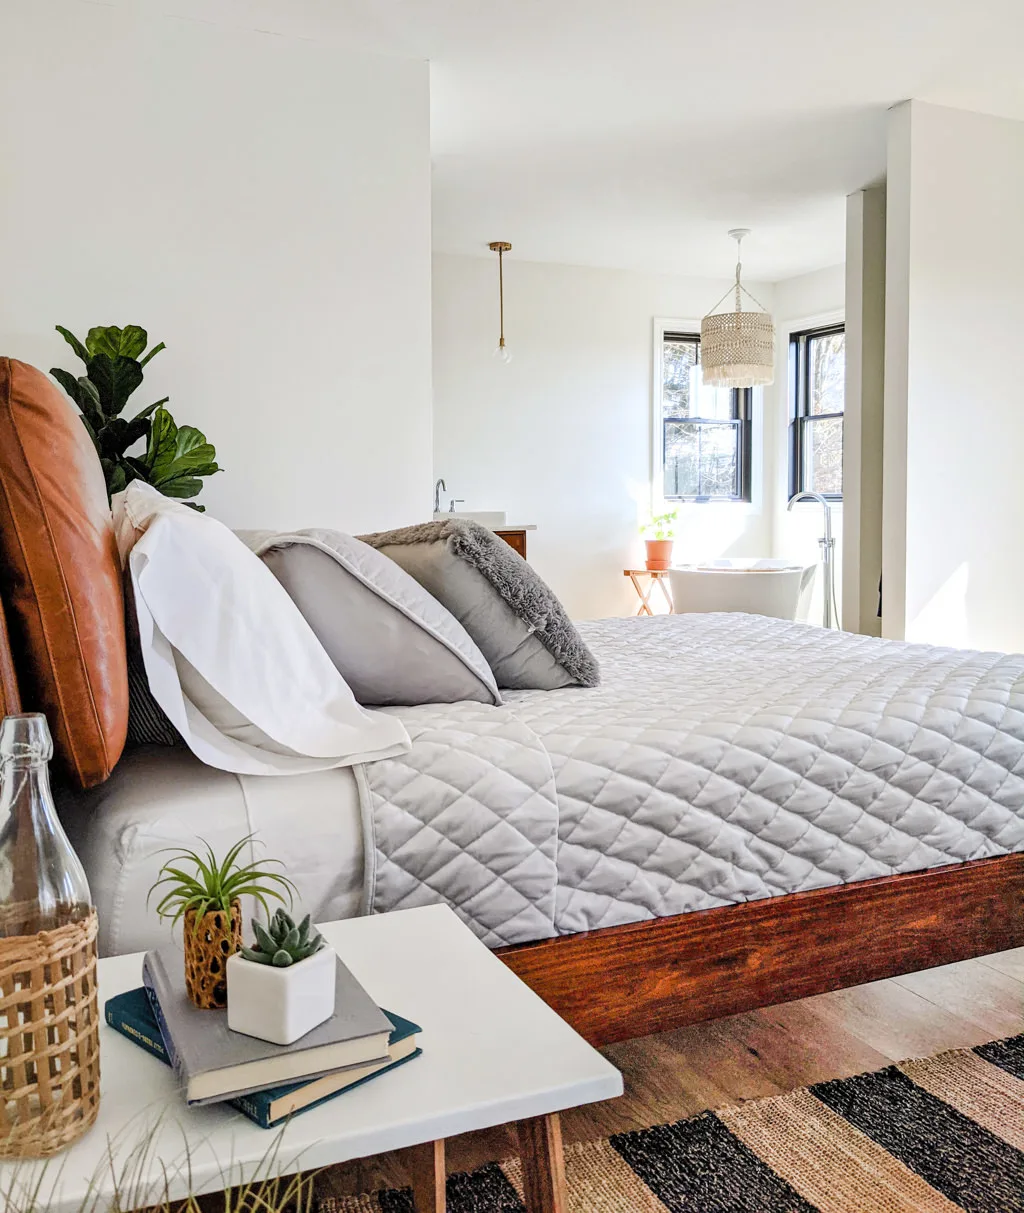 Mid-century modern bedroom ideas